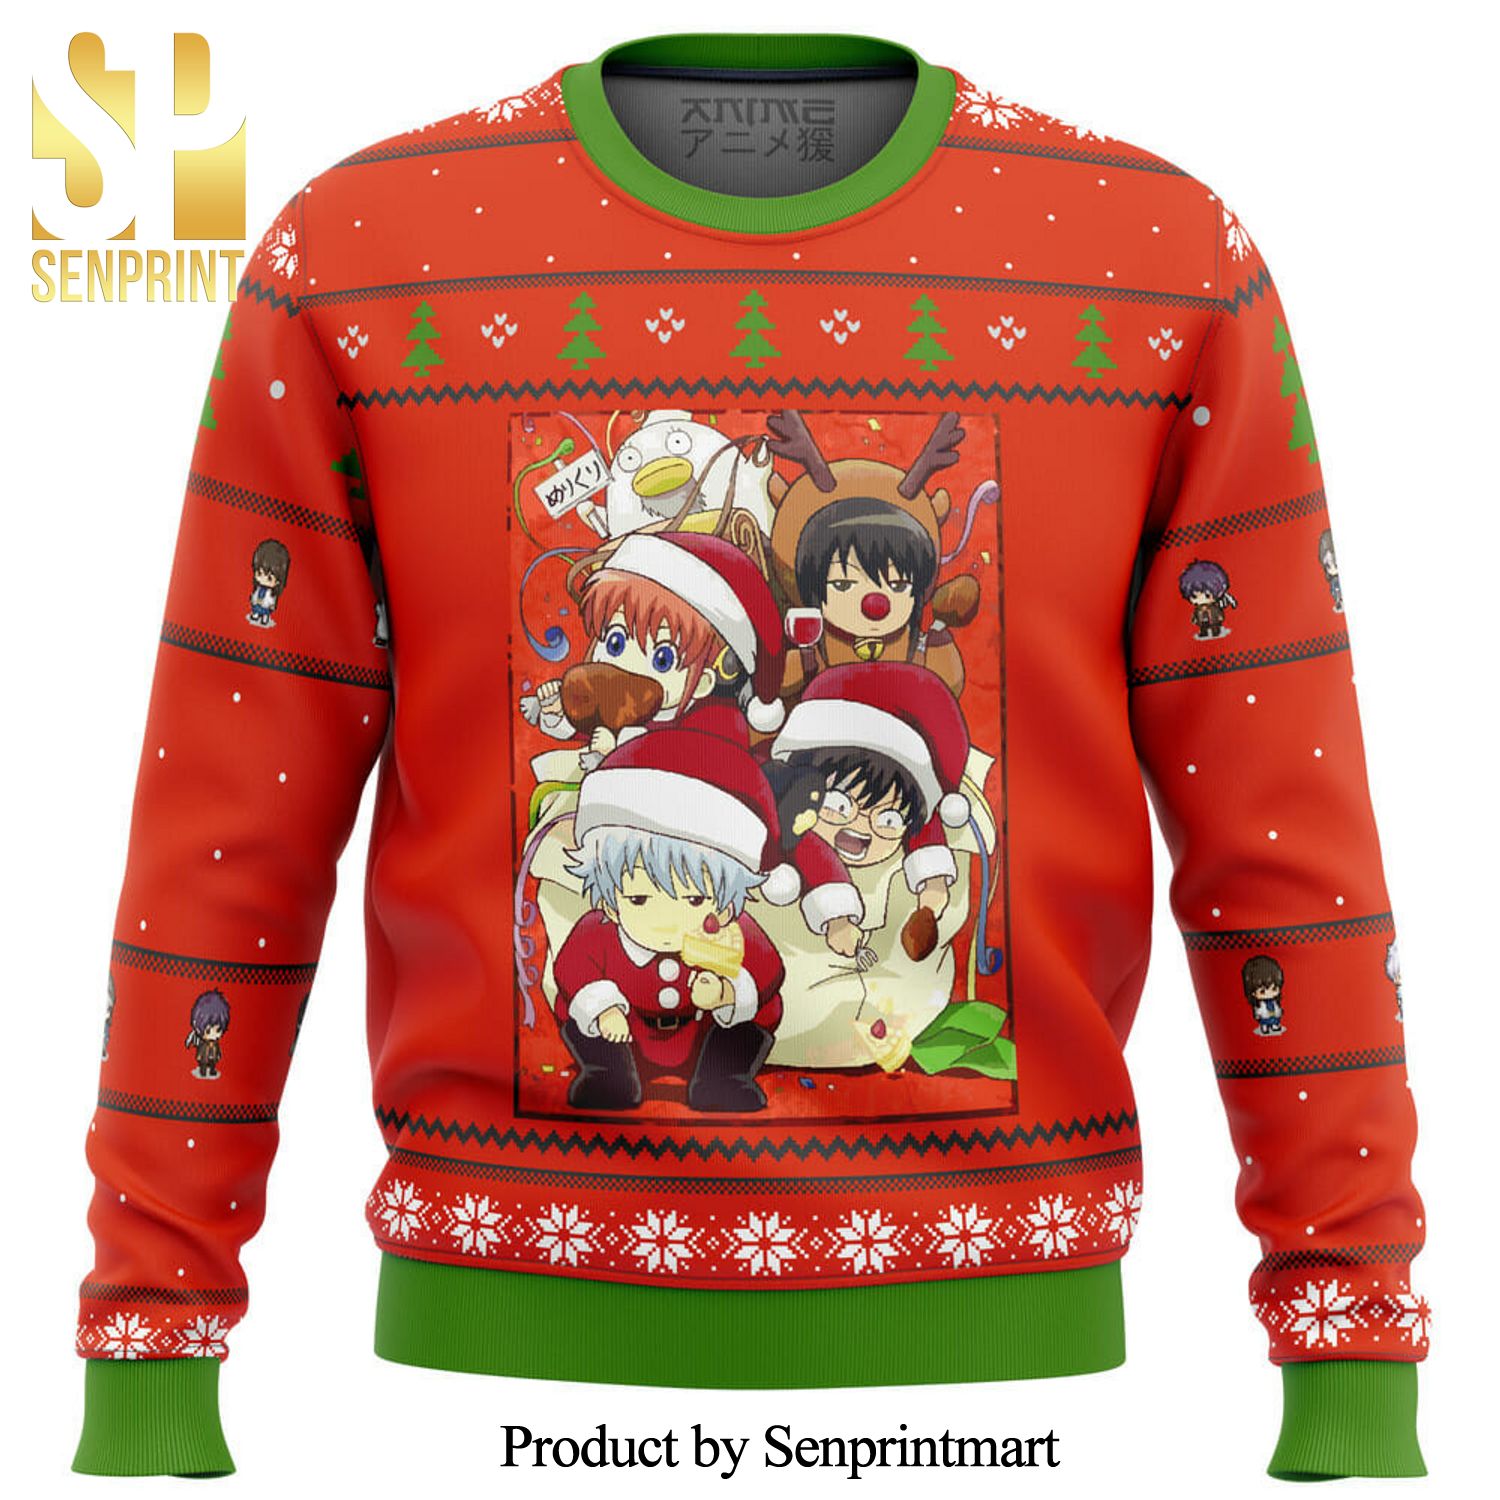 Gintama Holiday Manga Anime Knitted Ugly Christmas Sweater